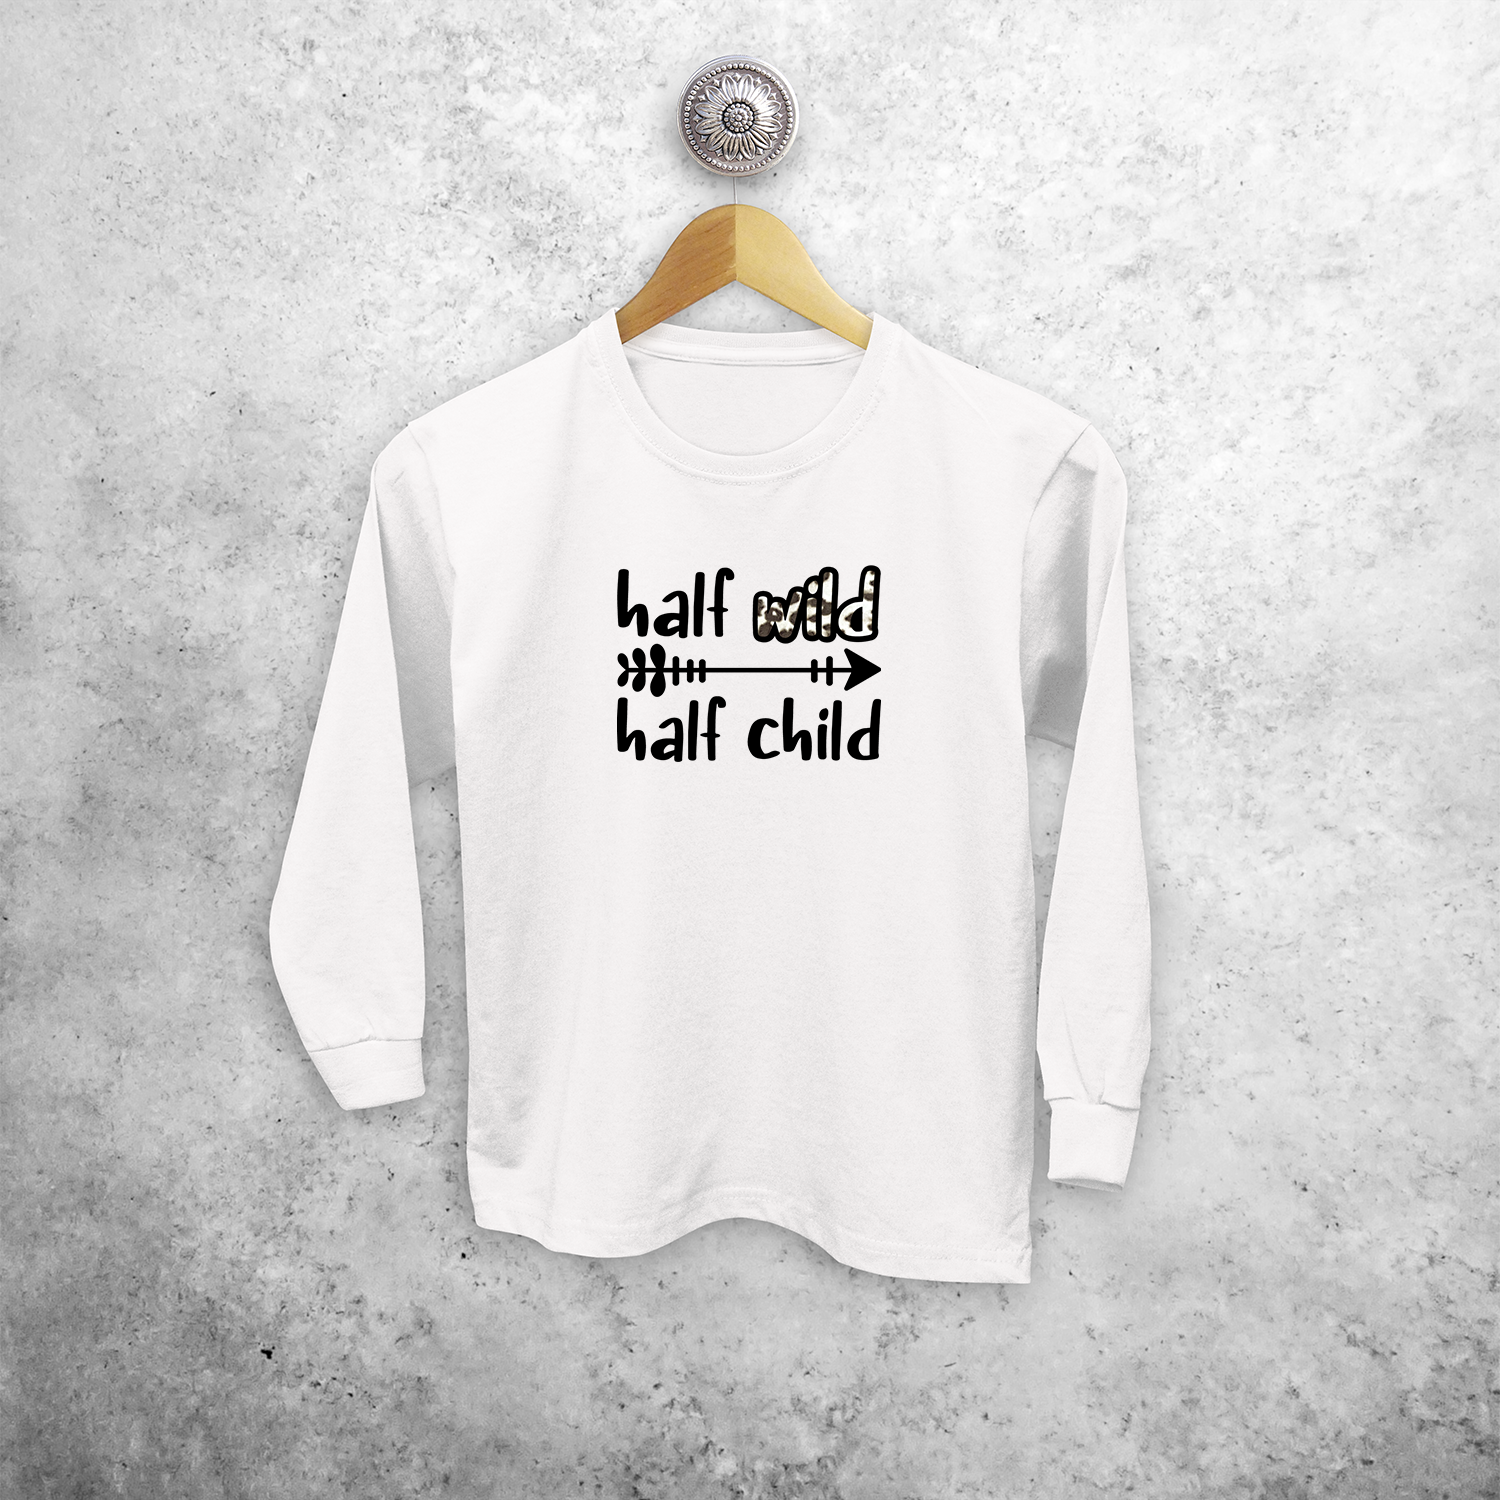 'Half wild, Half child' kids longsleeve shirt